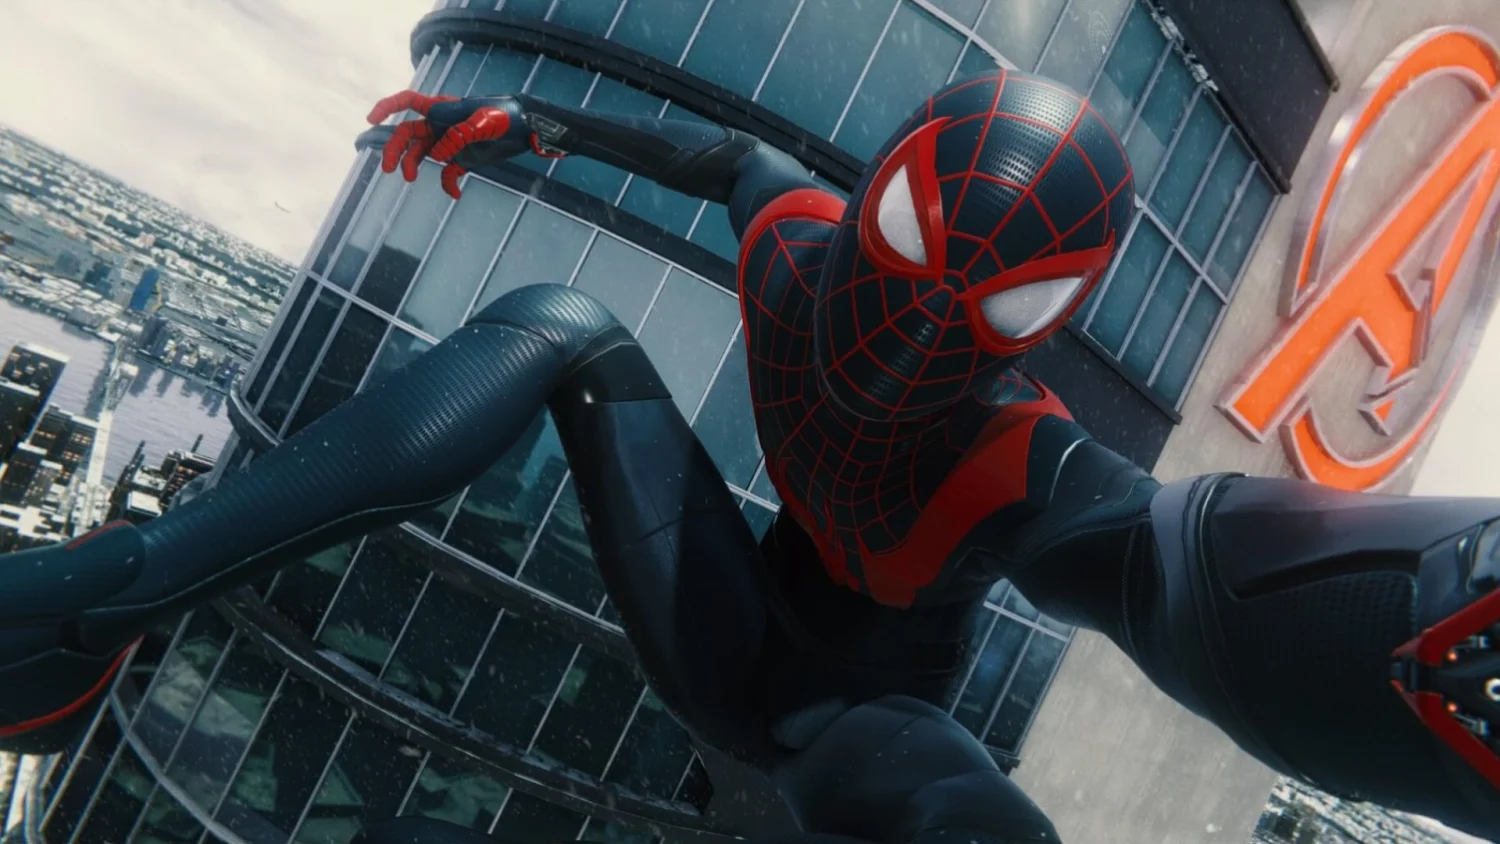 Jogo PS4 Marvel's Spider-Man Miles Morales